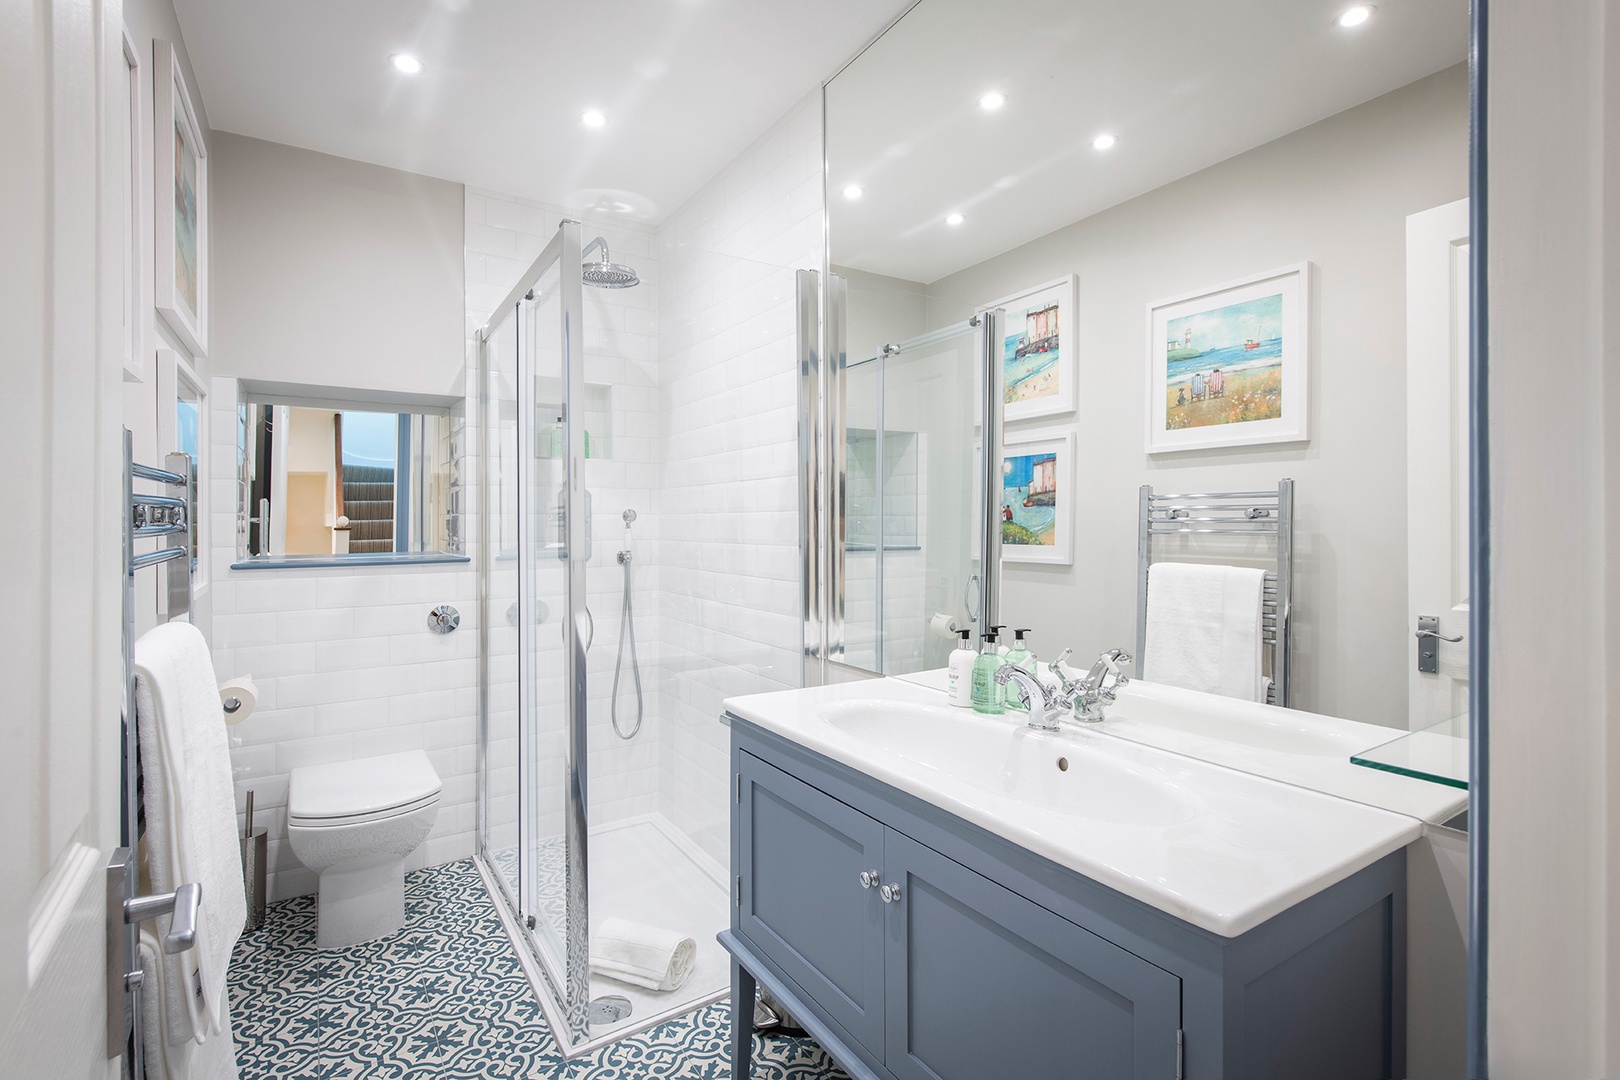 Find three beautiful full bathrooms - one that is en suite